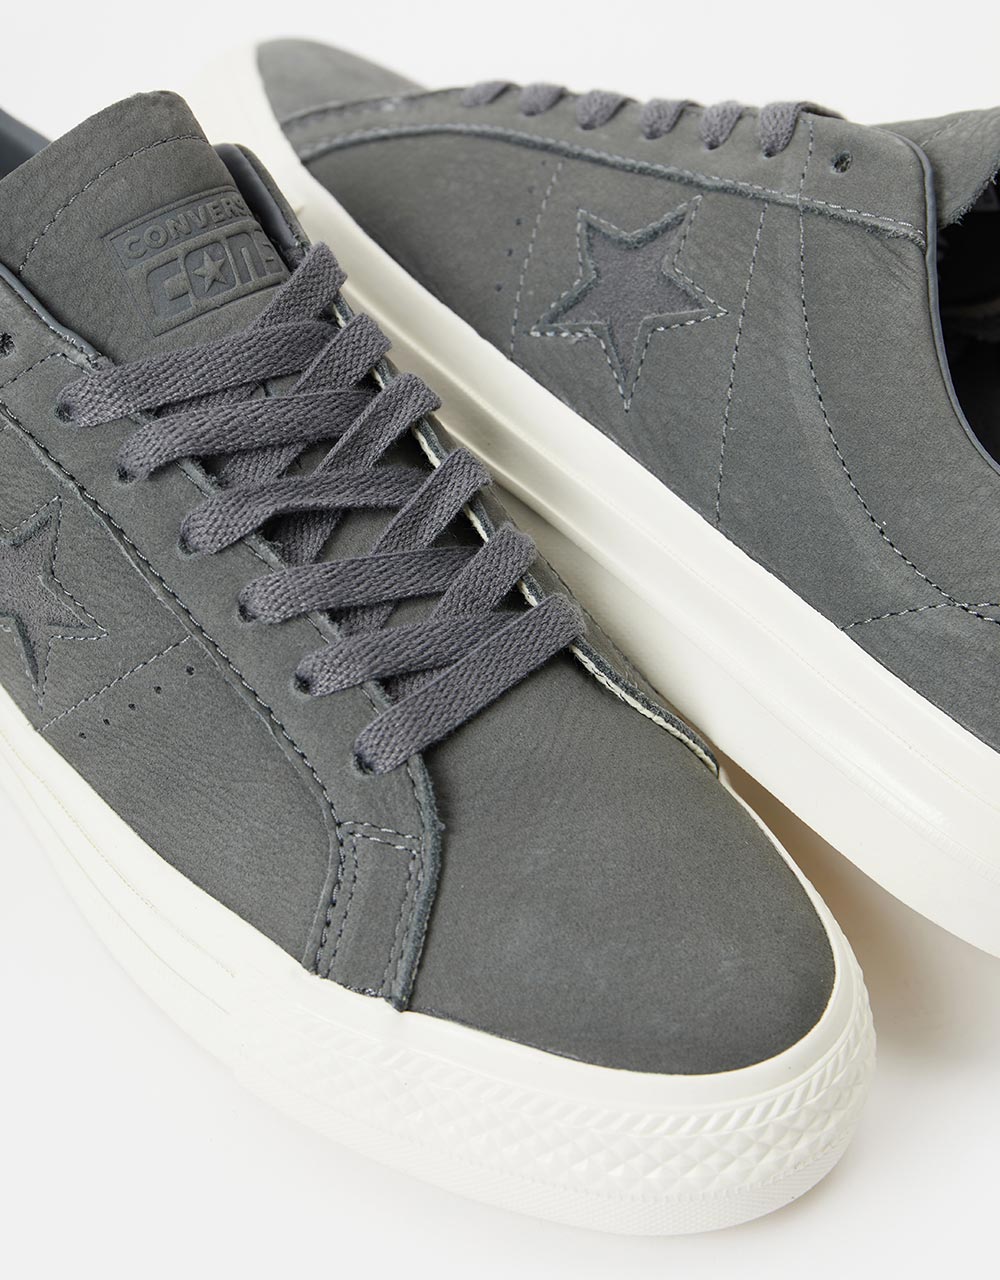 Converse One Star Pro Nubuck Leather Skate Shoes - Iron Grey/Iron Grey/Egret